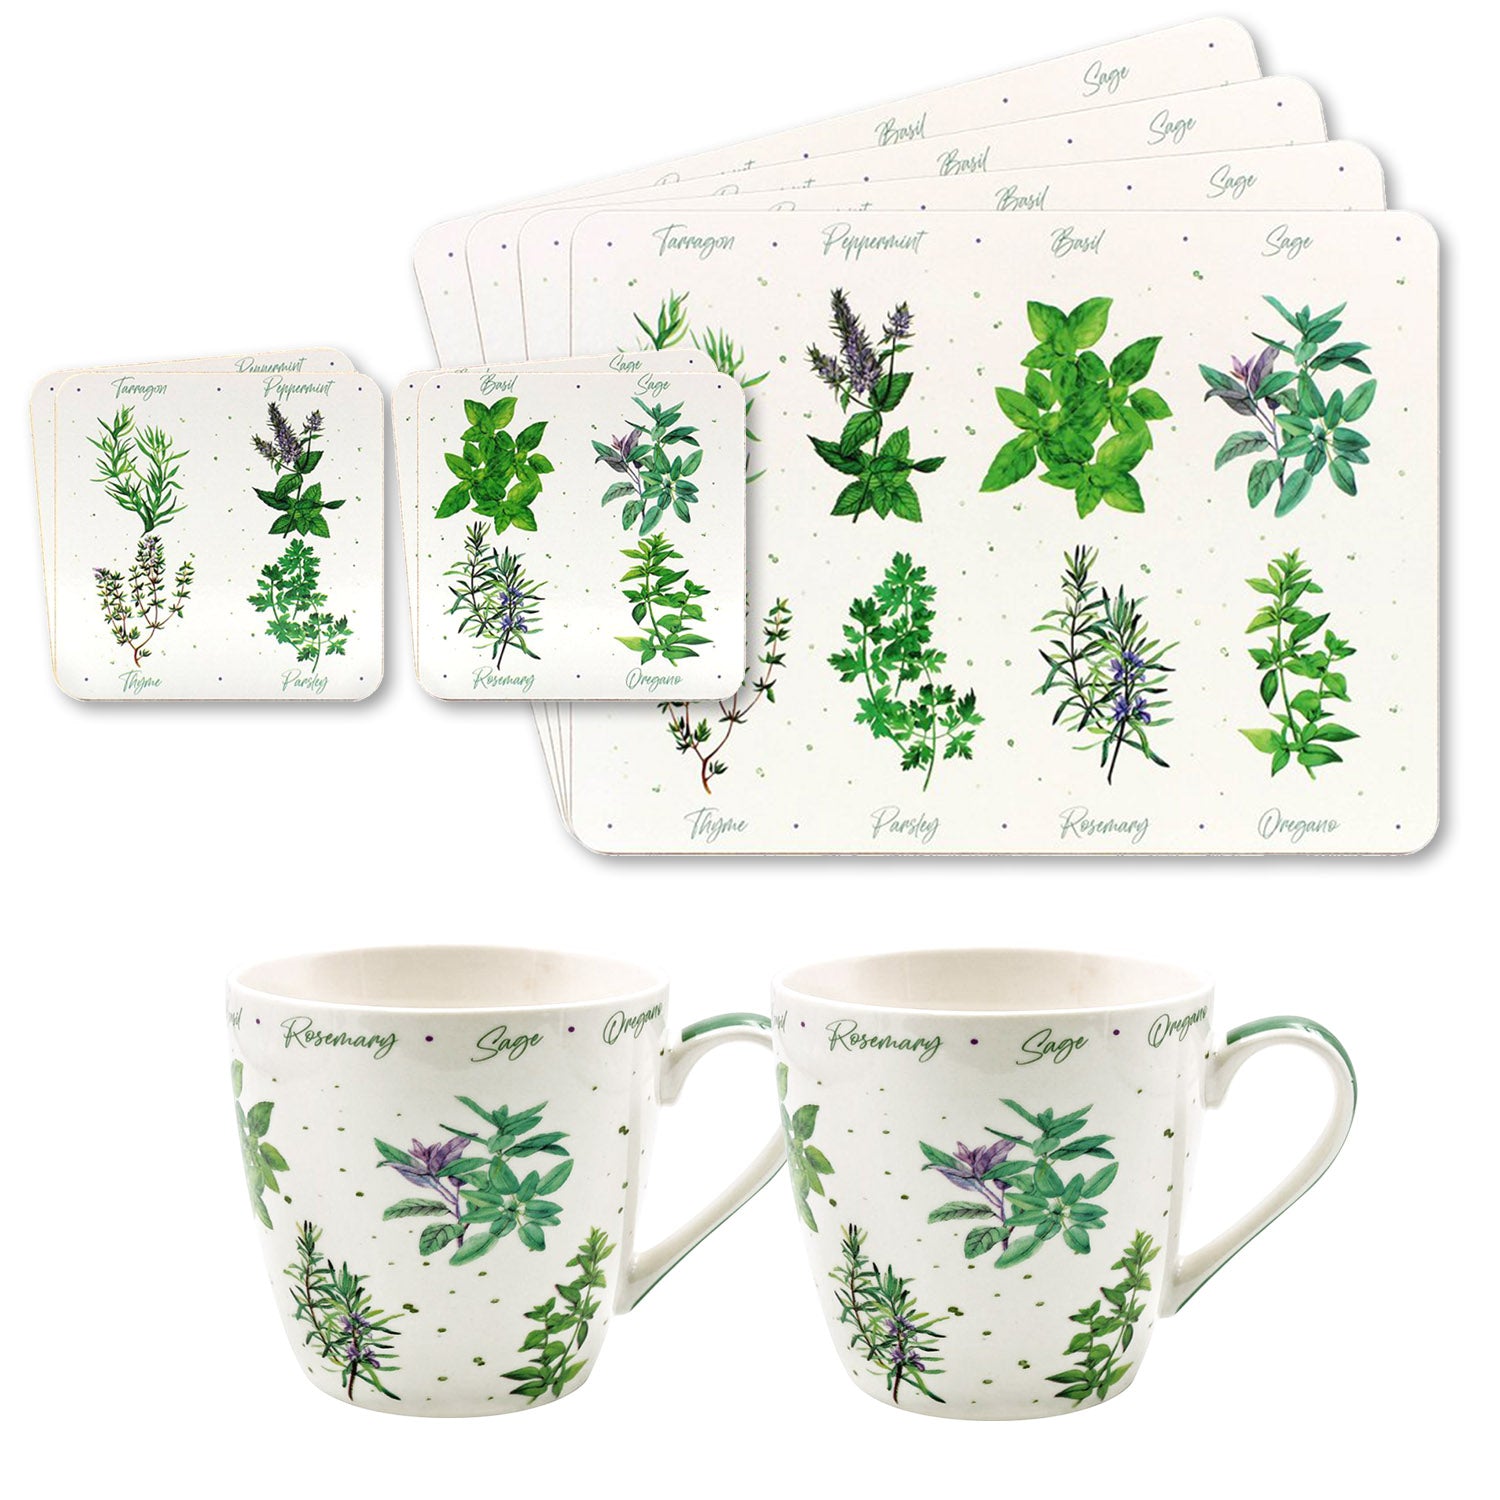 10-pc Set Green Herbs Garden Cork Coasters Placemats Breakfast Mugs 2x Leaves